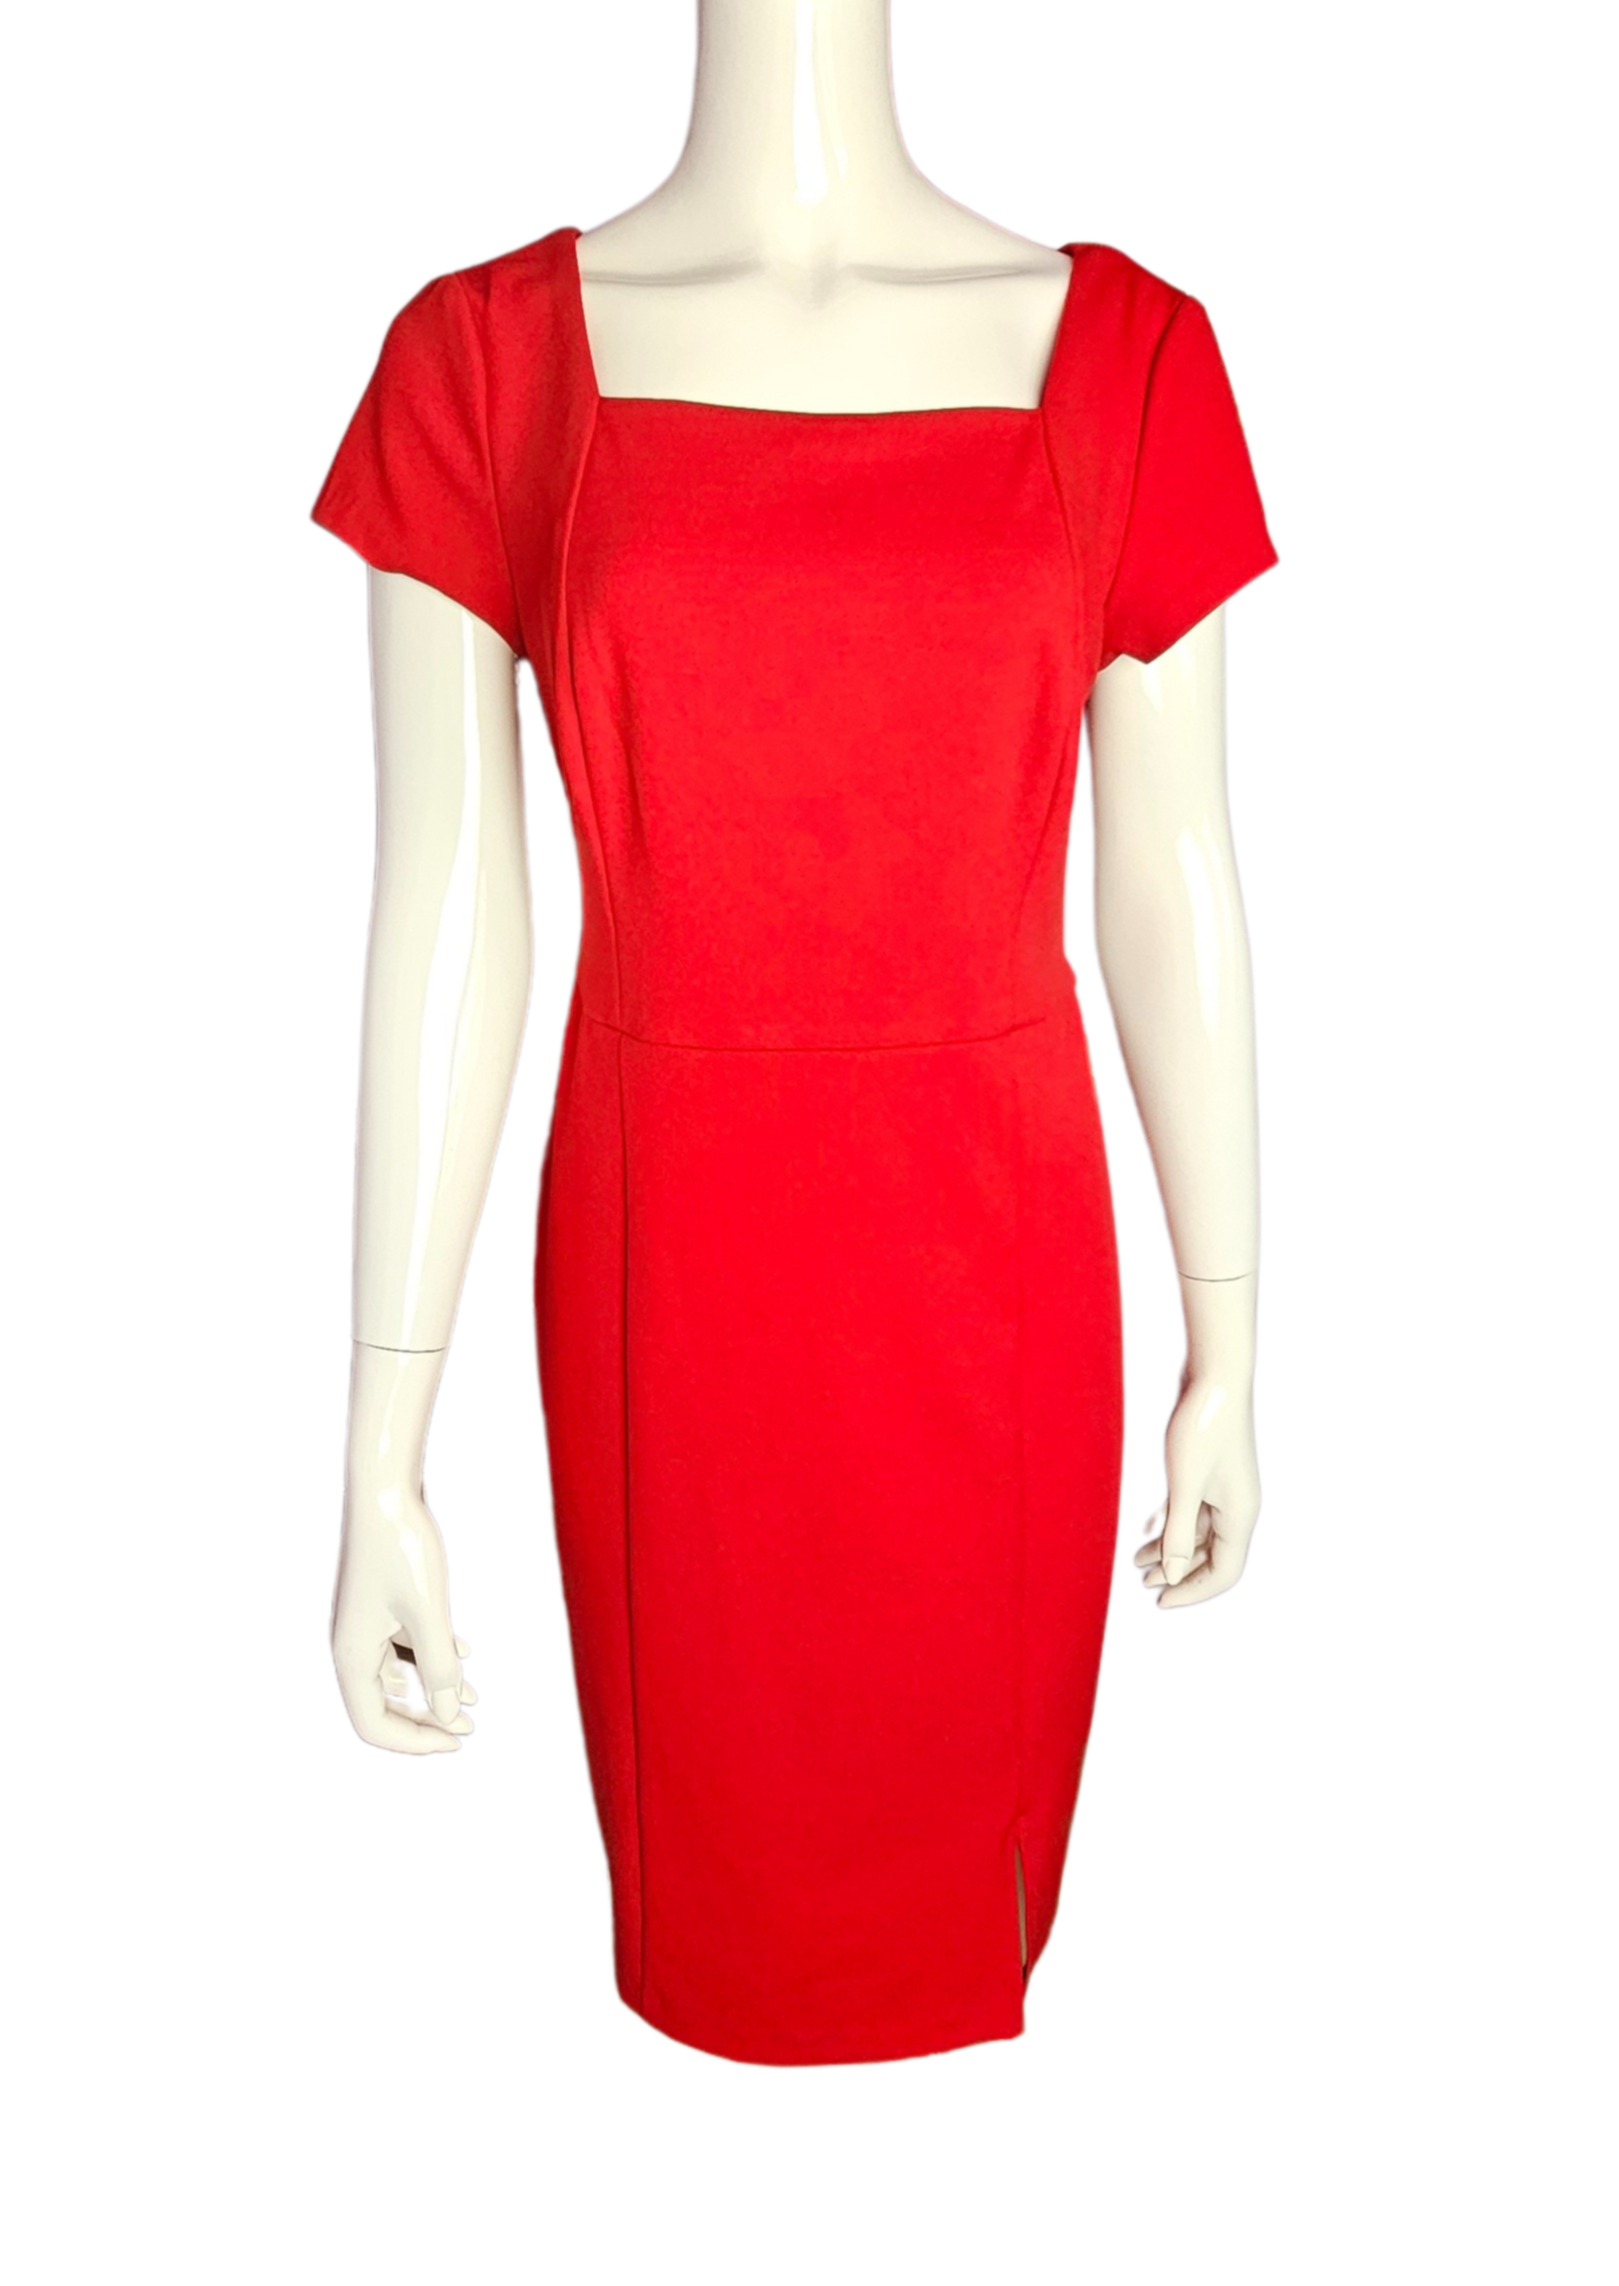 Women's Little Red Cocktail Dress